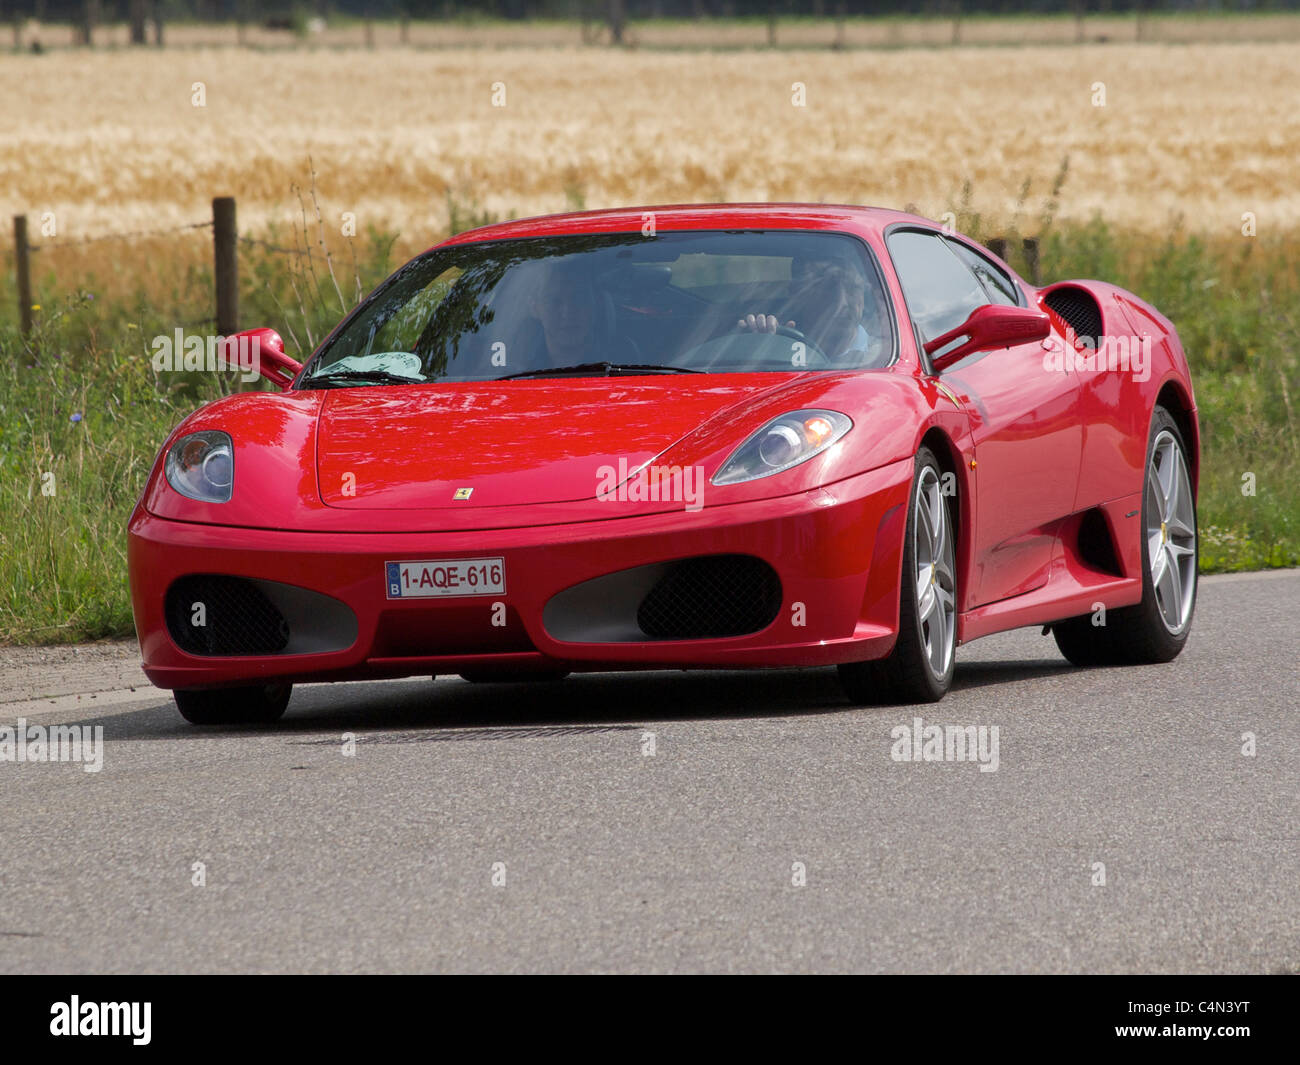 Red Ferrari F430 sportscar Stock Photo